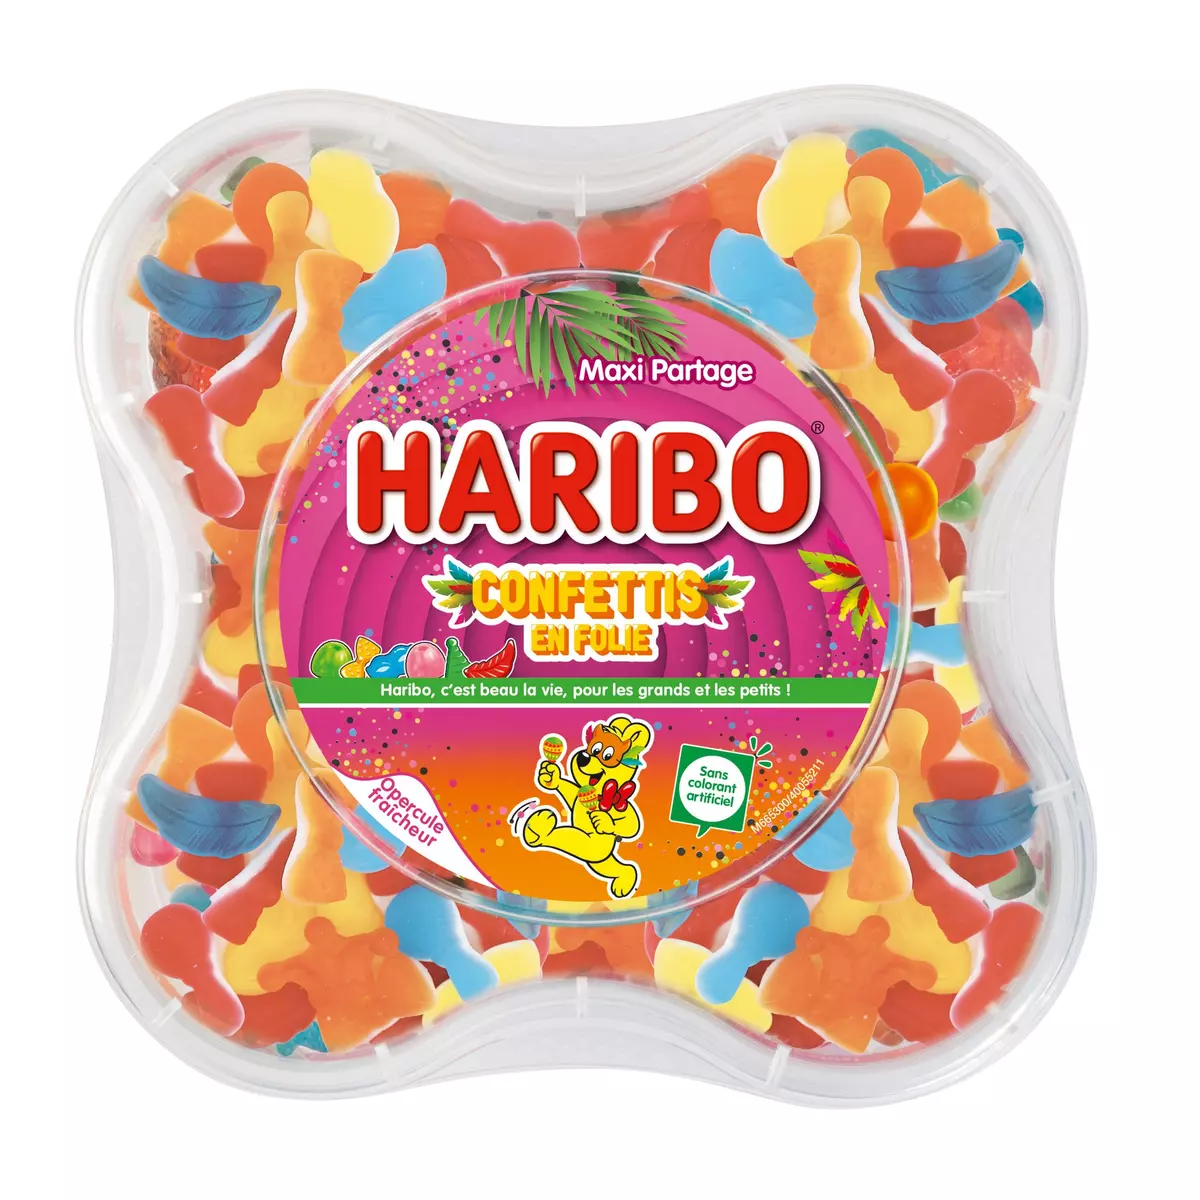 HARIBO Assortiment de bonbons gélifiés confettis en folie 600g